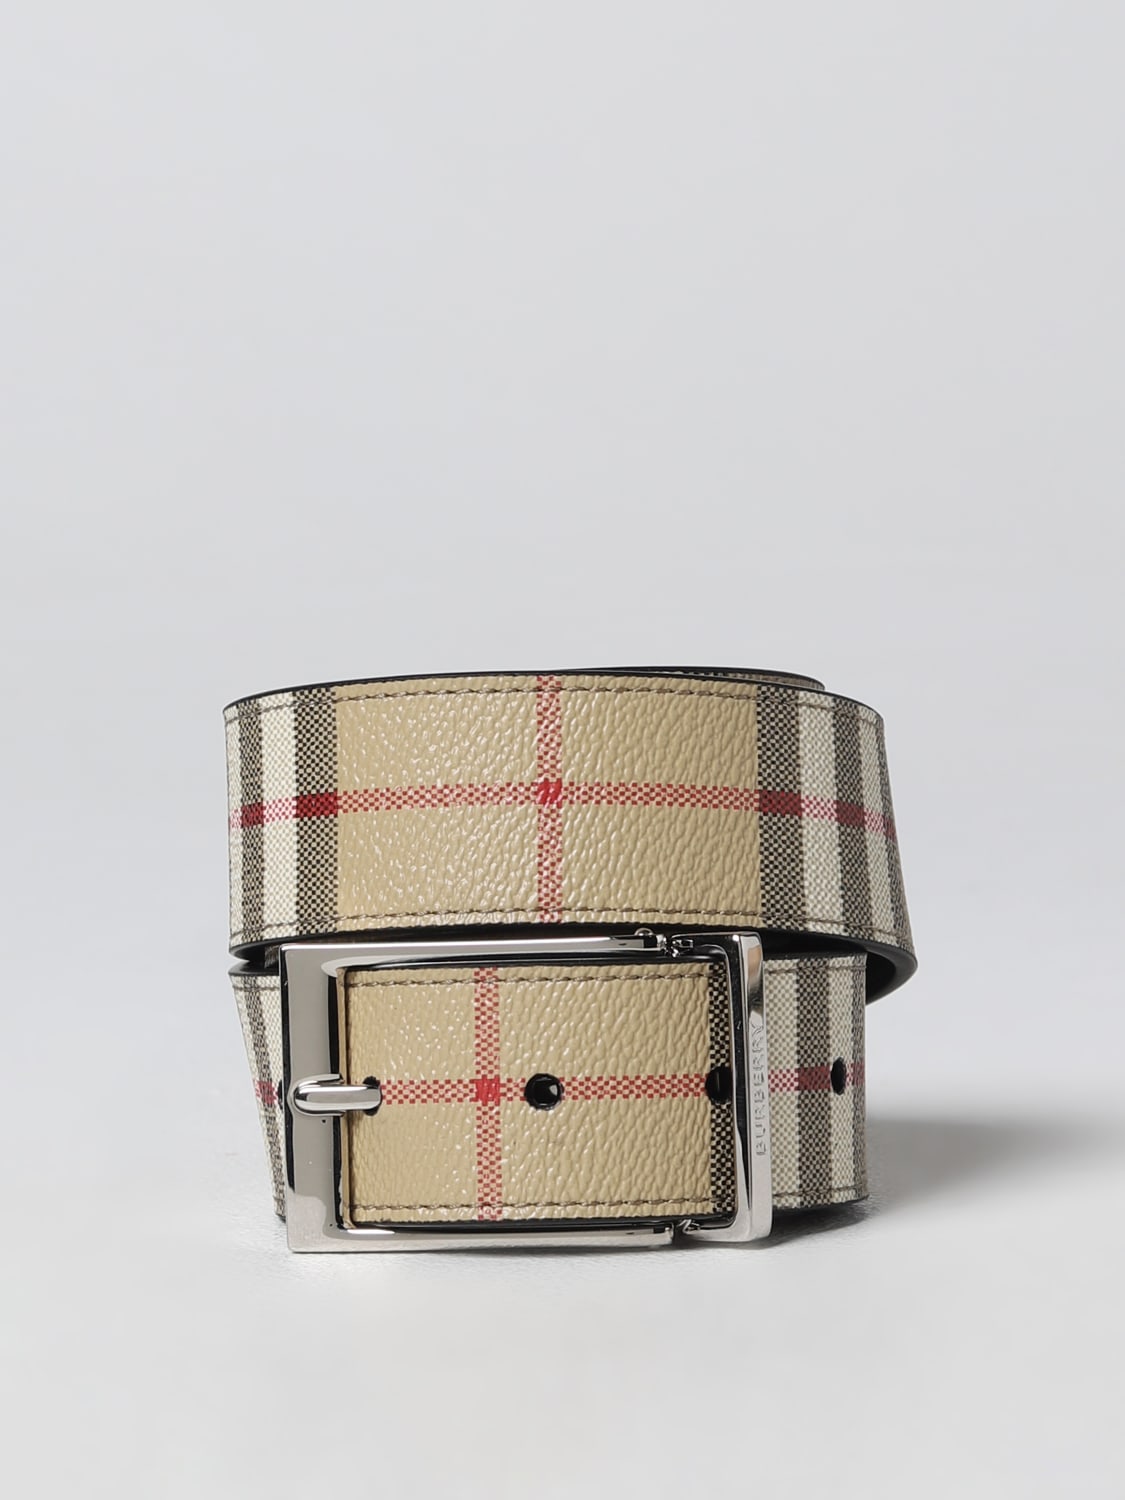 BURBERRY Belts Women, Vintage Check belt Beige